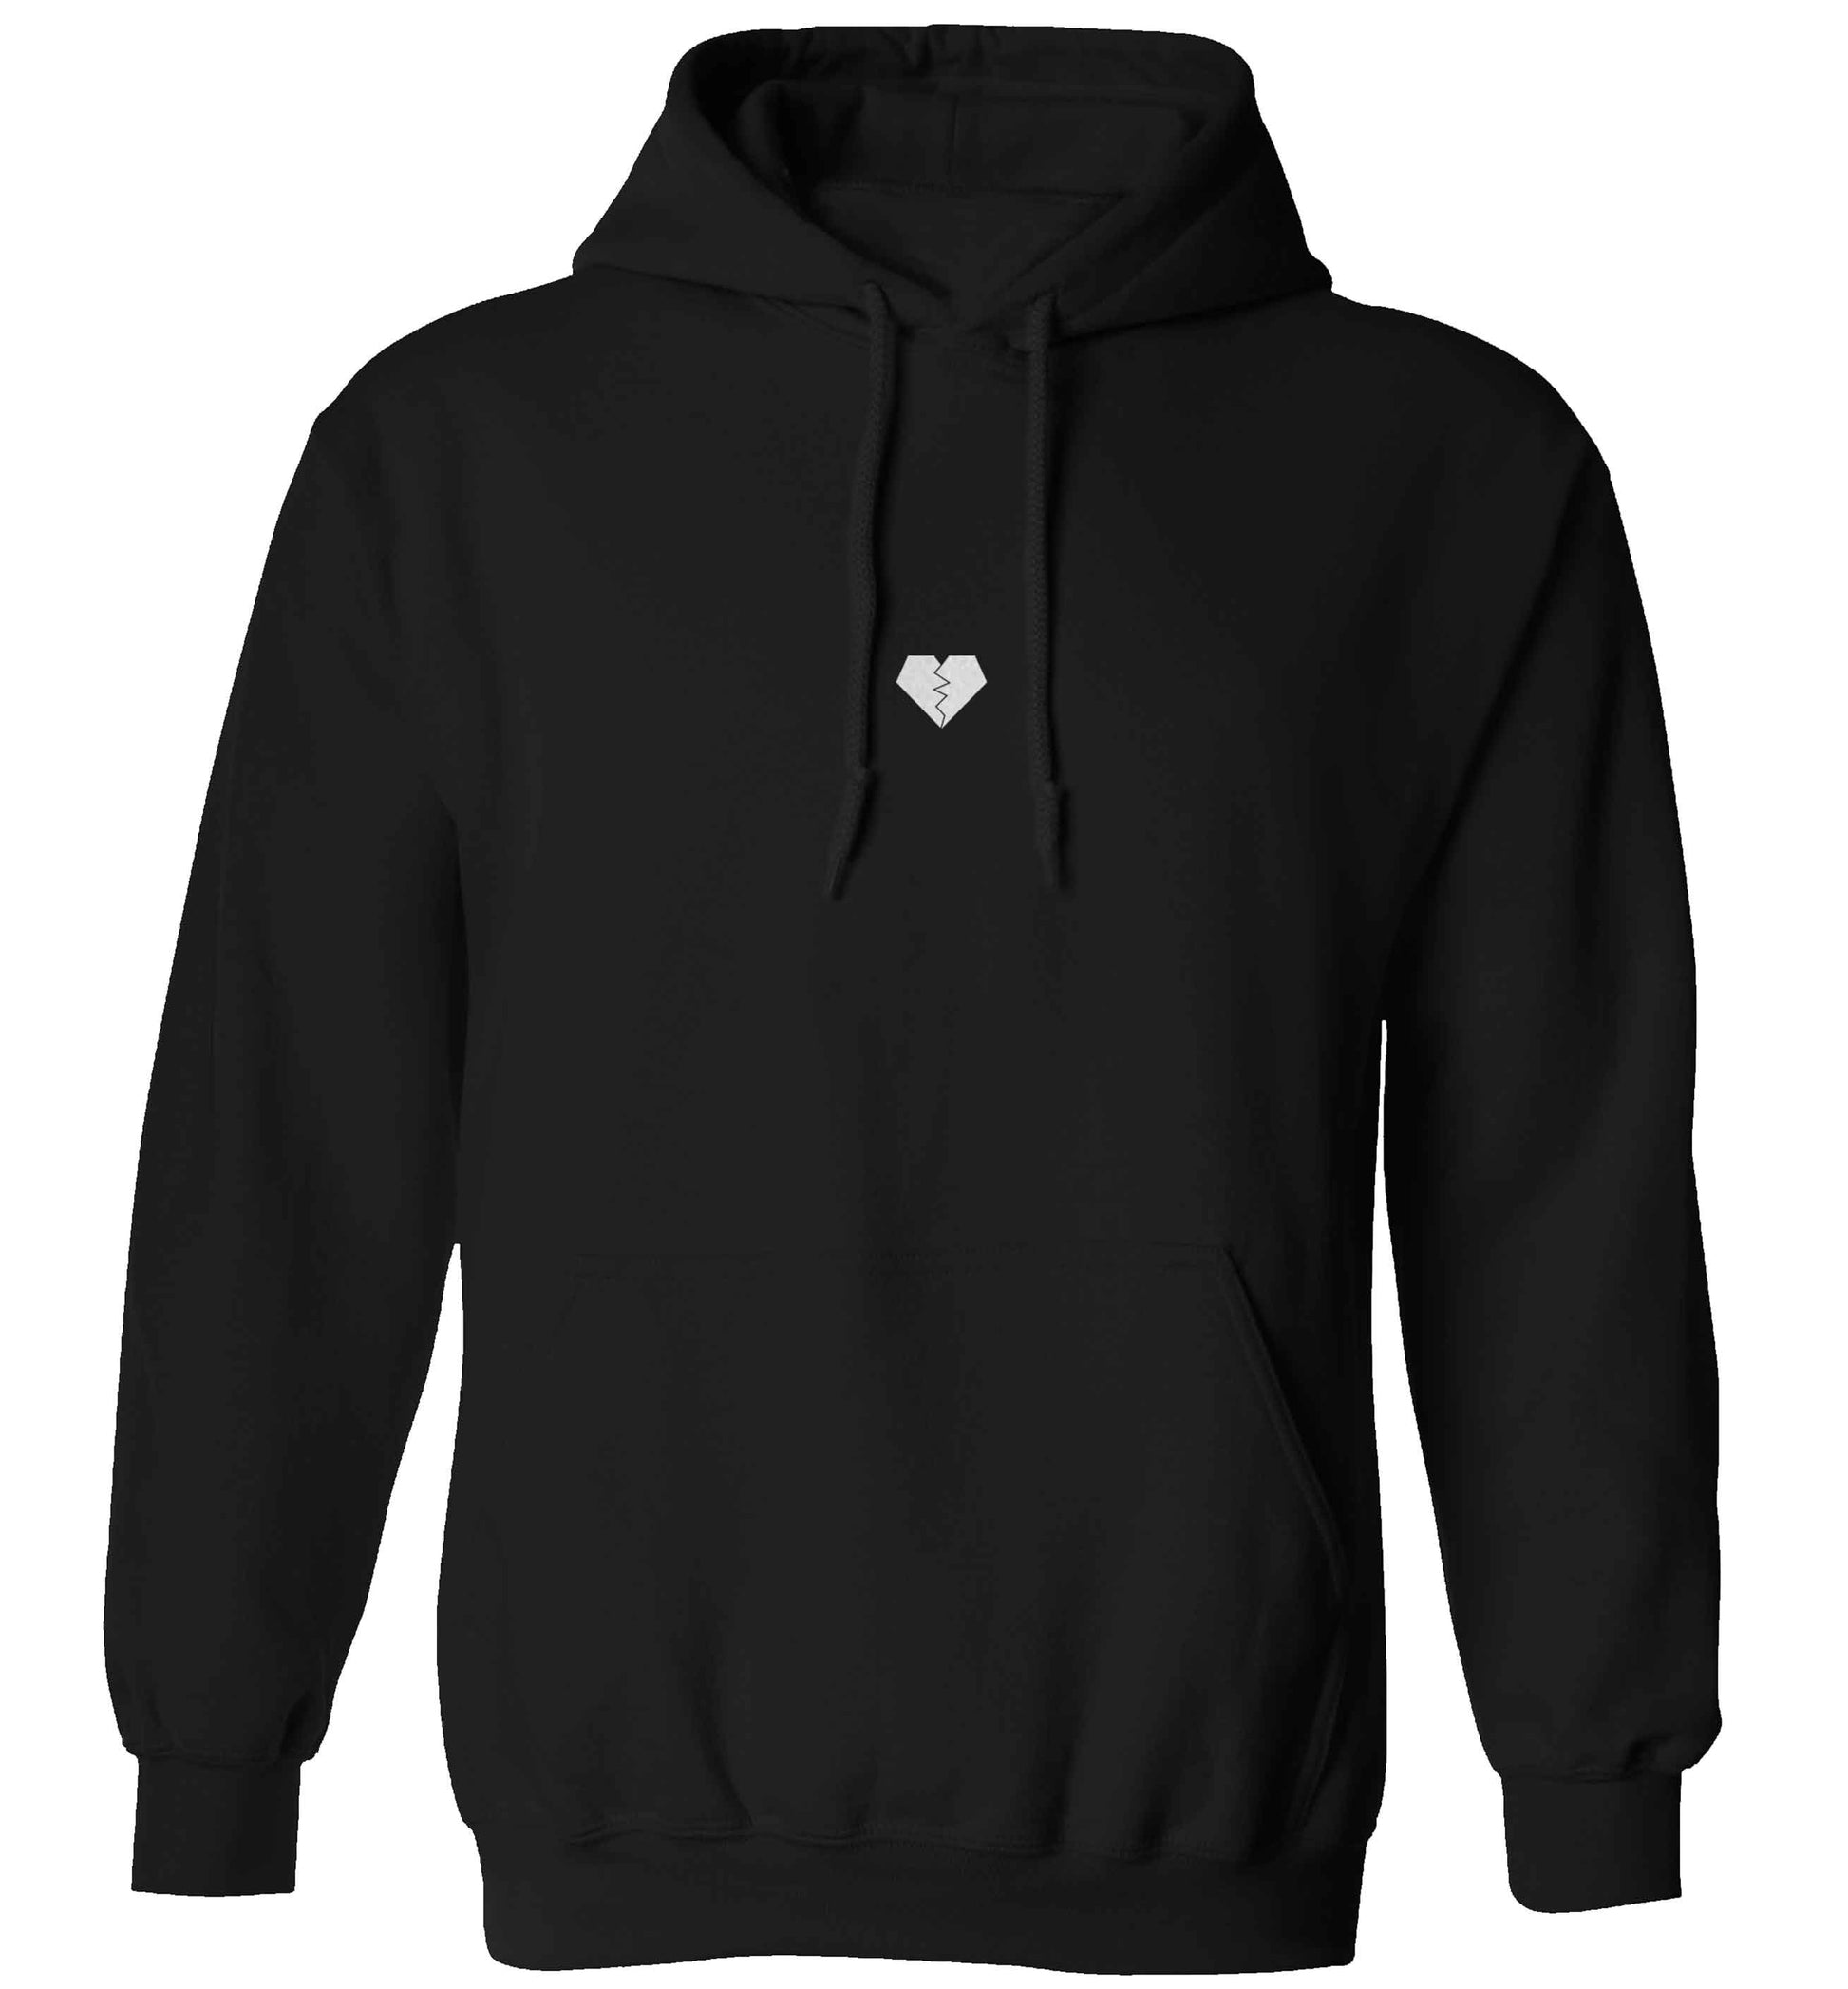 Tiny broken heart adults unisex black hoodie 2XL